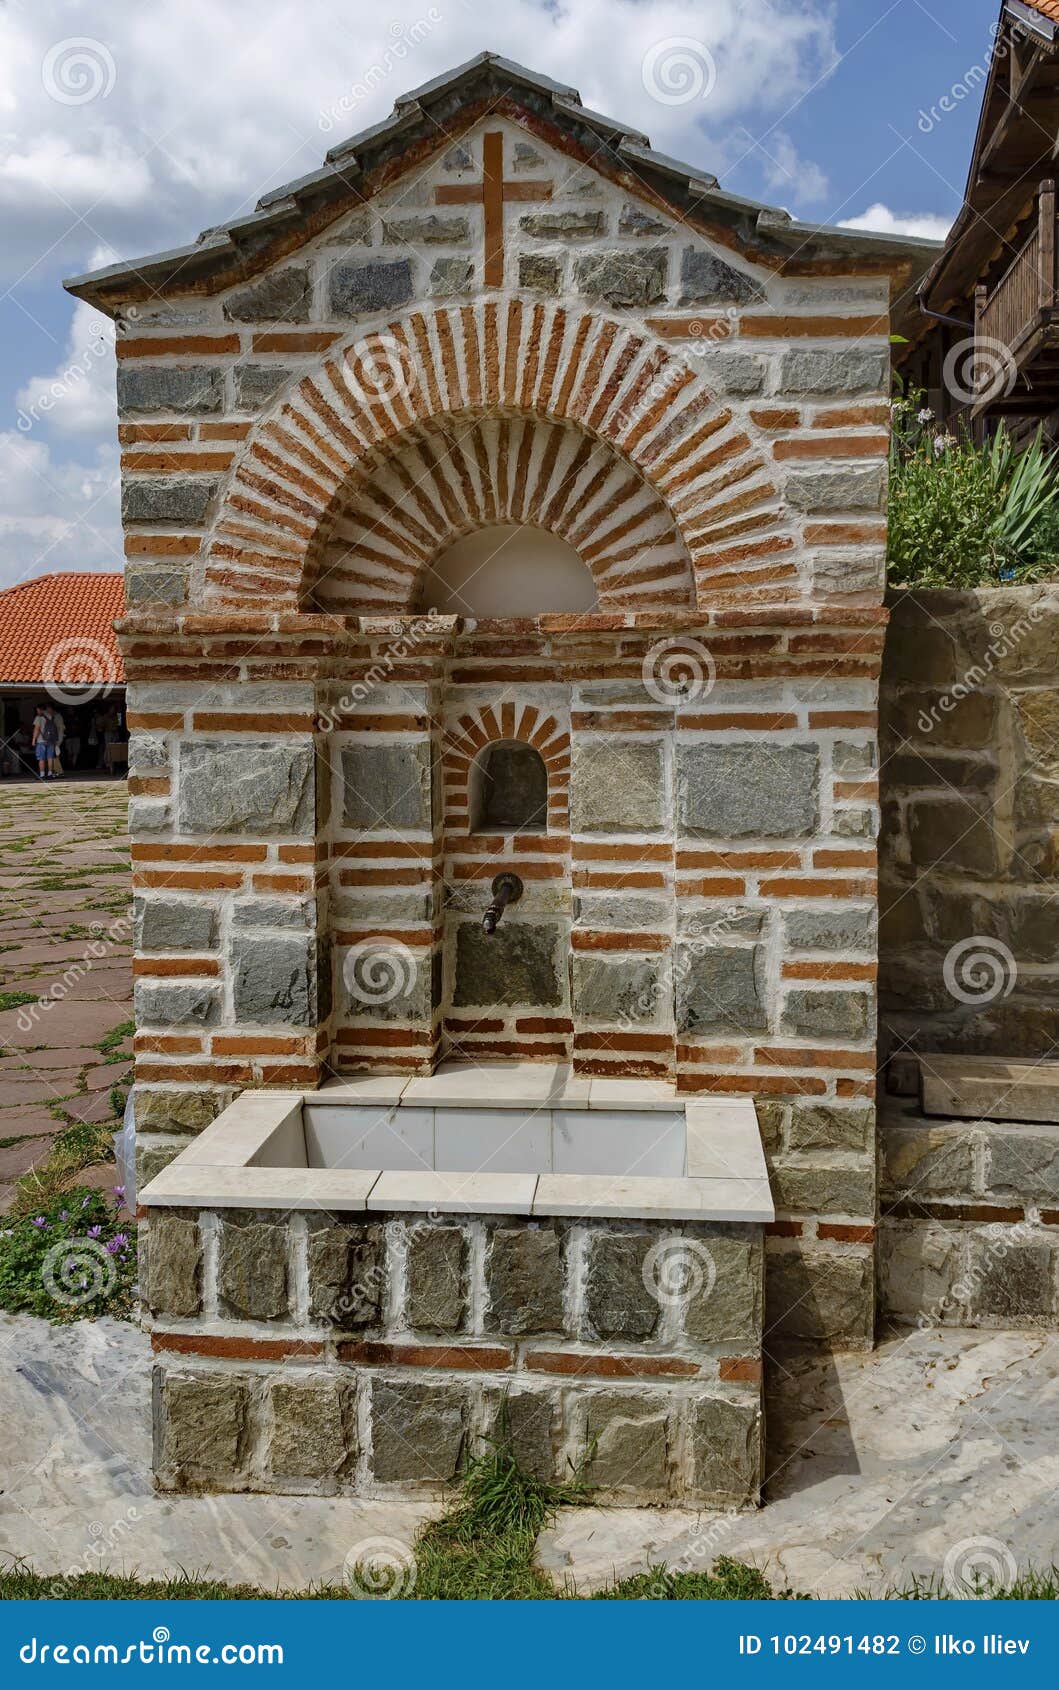 Fountain in the Yard of Monastery Stock Photo - Image of yard, stone